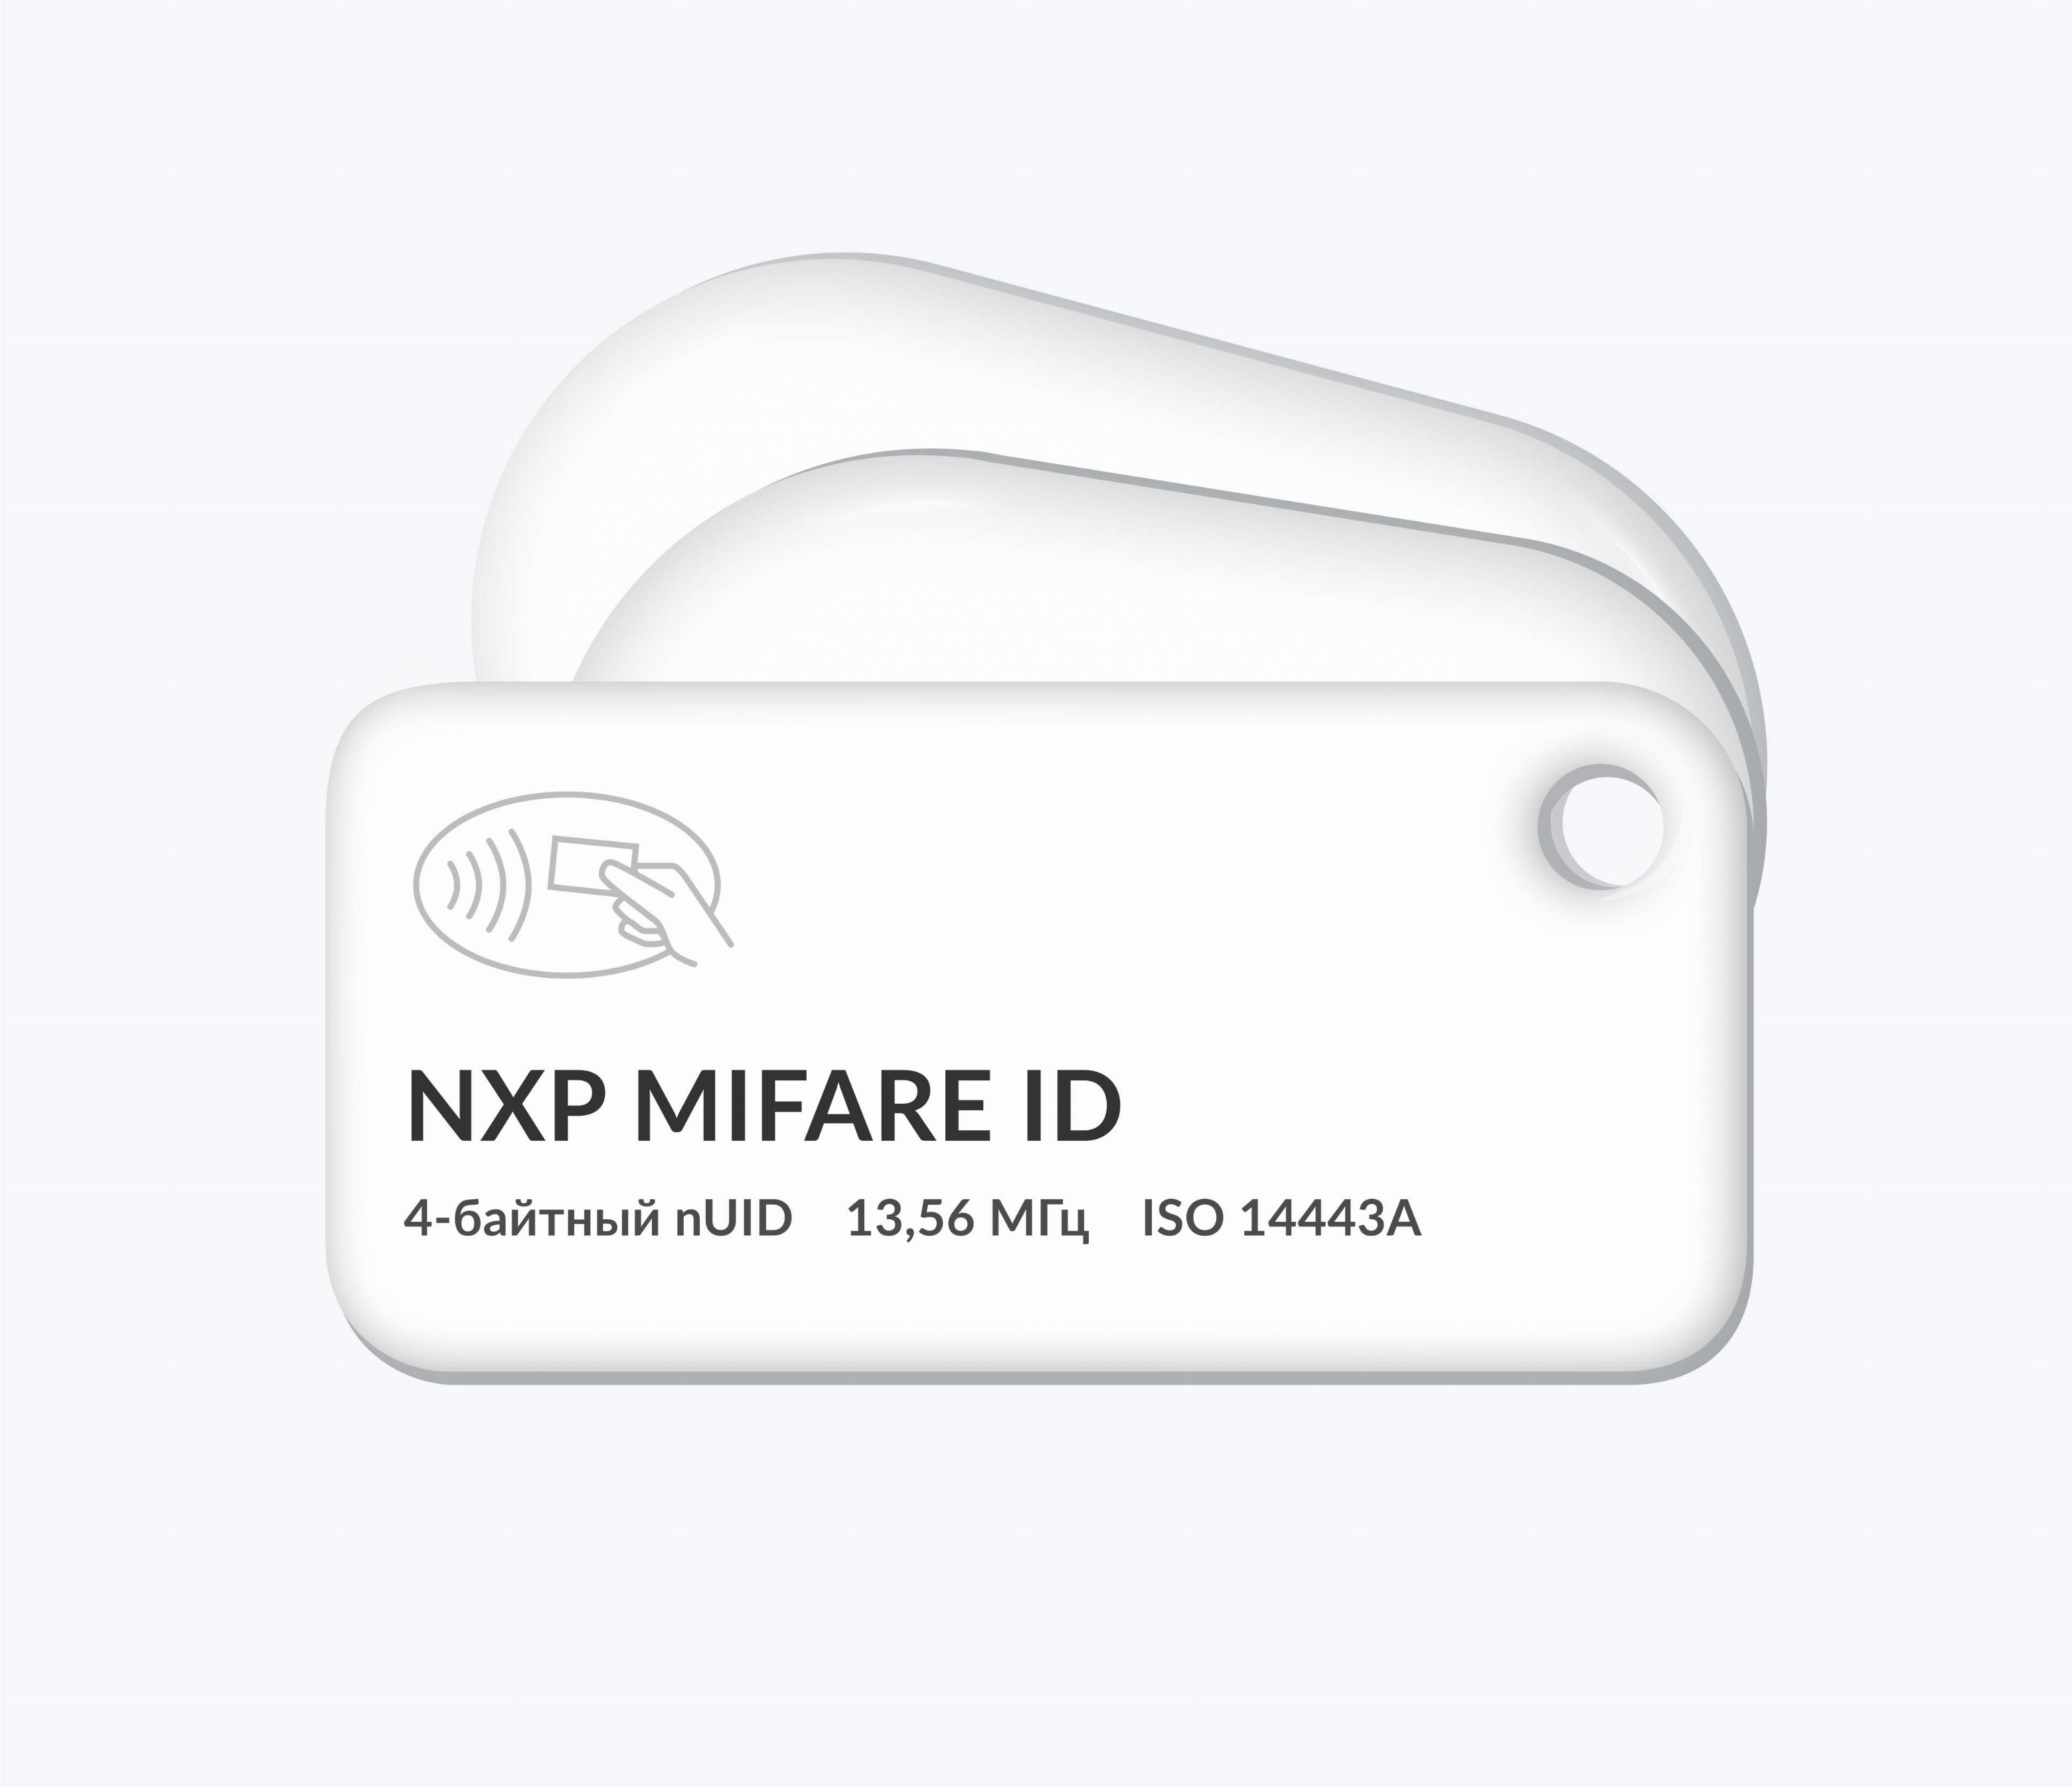 RFID-брелоки NEOKEY® с чипом NXP MIFARE ID 4 byte nUID и вашим логотипом RFID-брелоки NEOKEY® с чипом NXP MIFARE ID 4 byte nUID и вашим логотипом